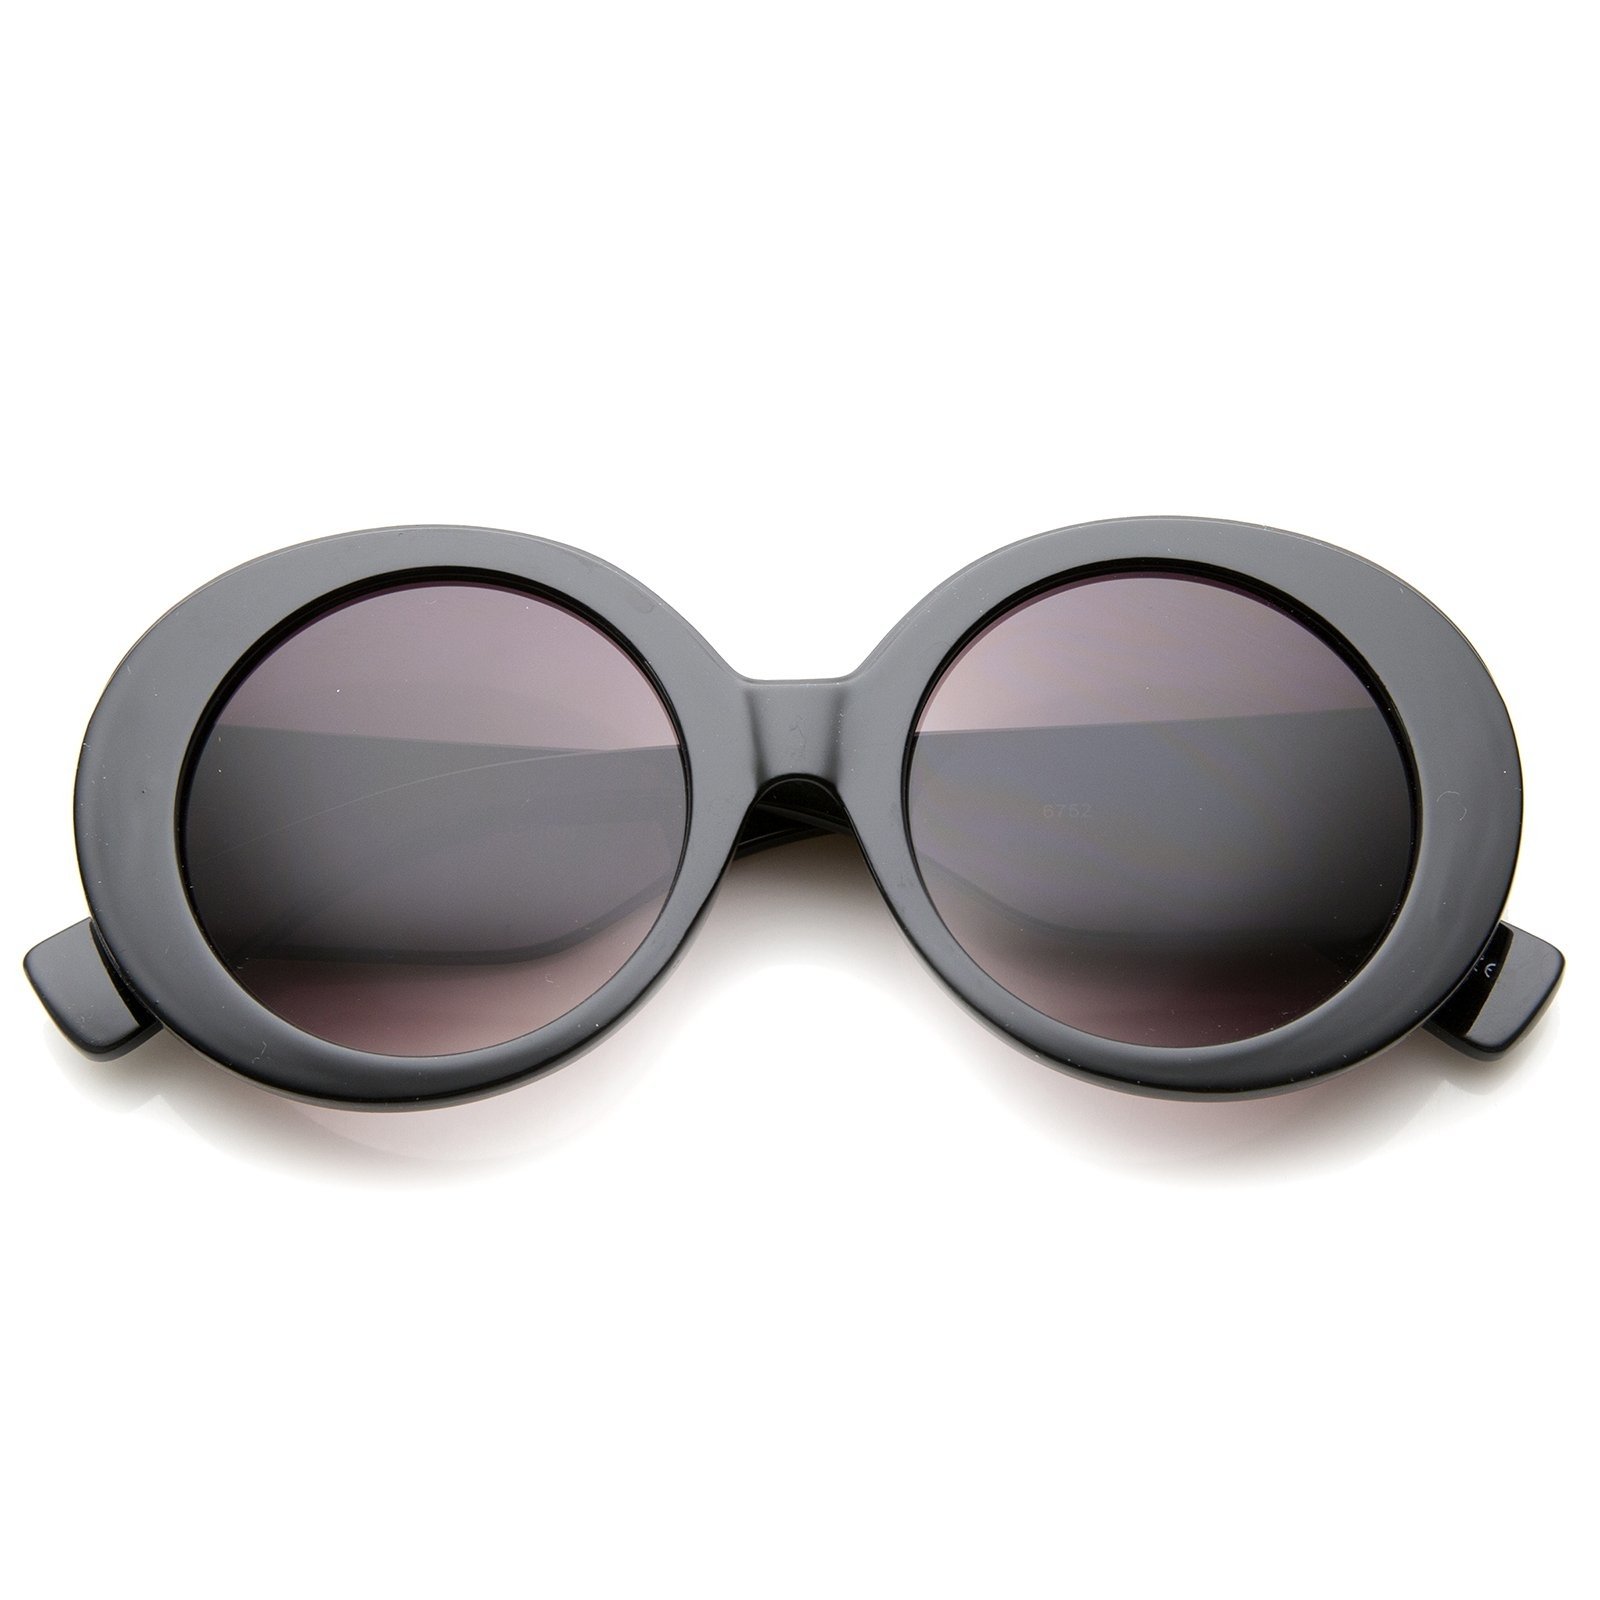 Womens High Fashion Glam Chunky Round Oversize Sunglasses 50mm - Orange-Tortoise / Amber